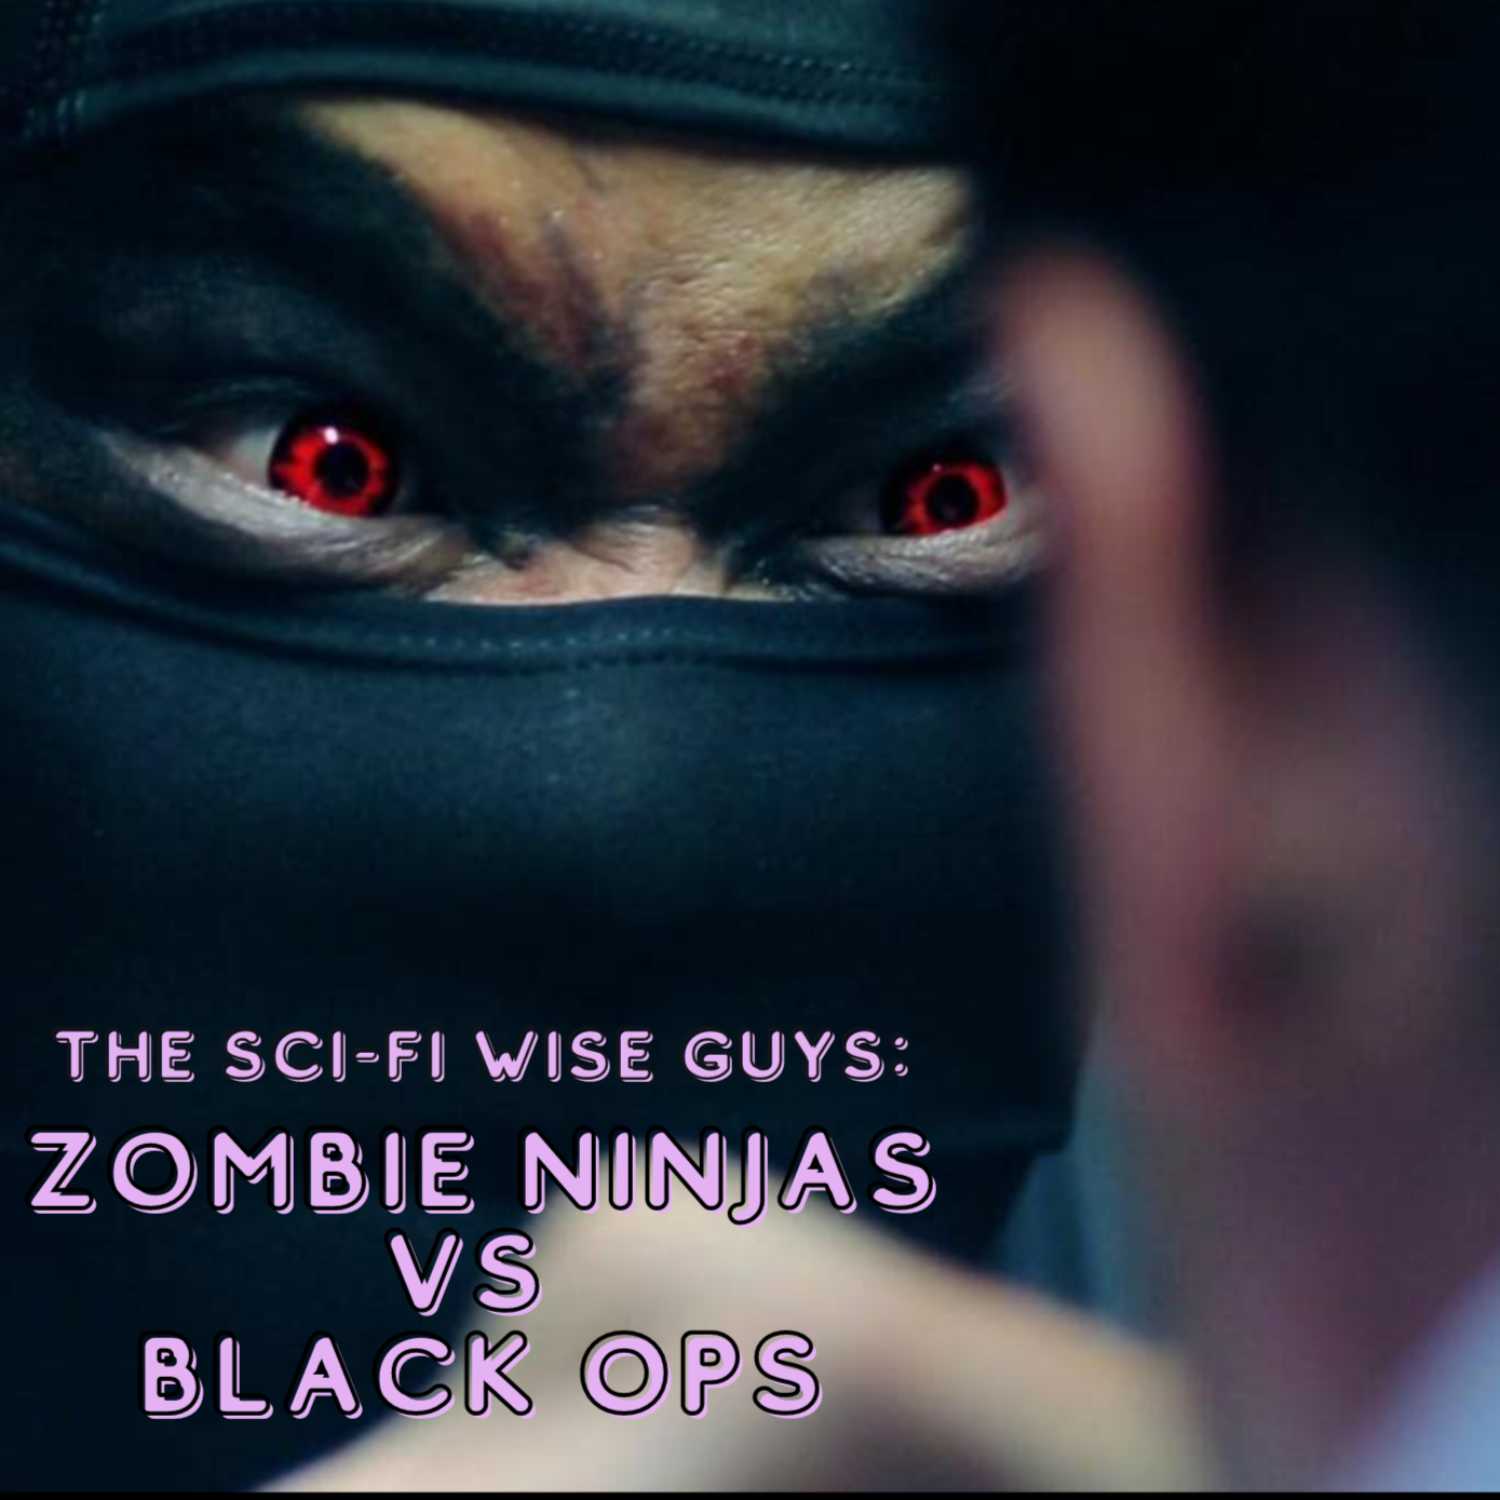 Mean Mugs and Shoulder Shrugs (Zombie Ninjas vs Black Ops)